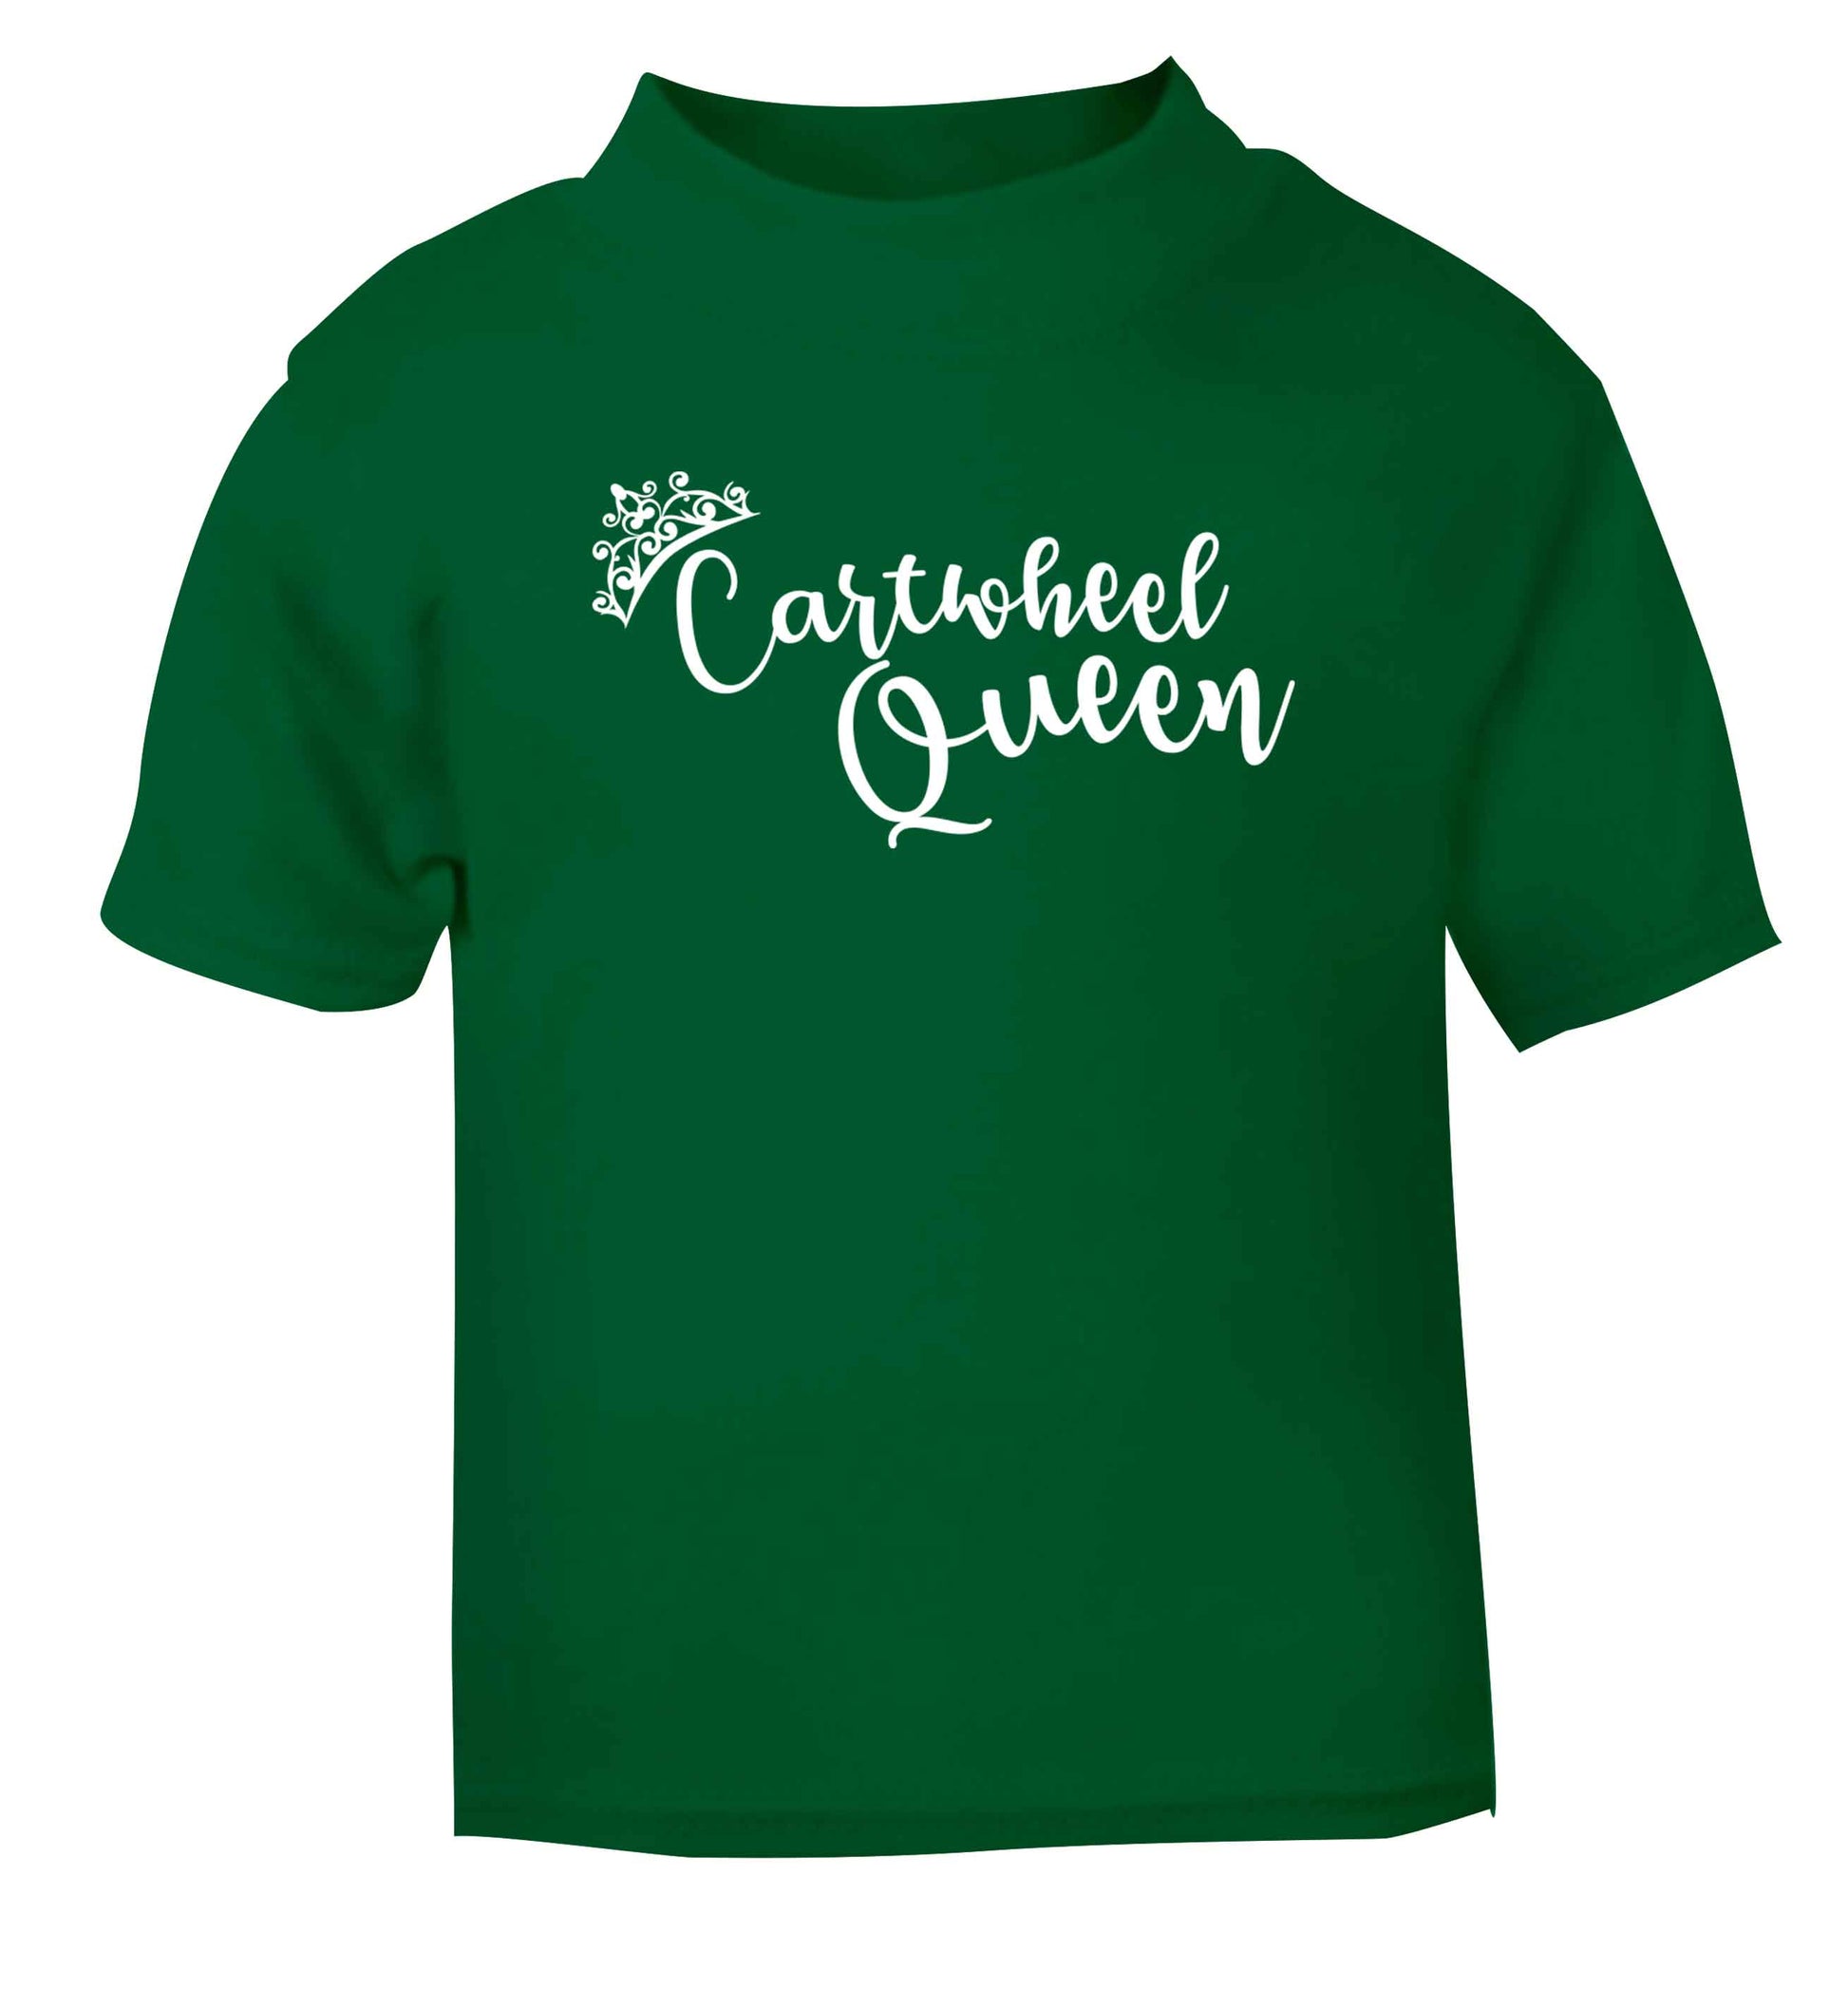 Cartwheel queen green Baby Toddler Tshirt 2 Years